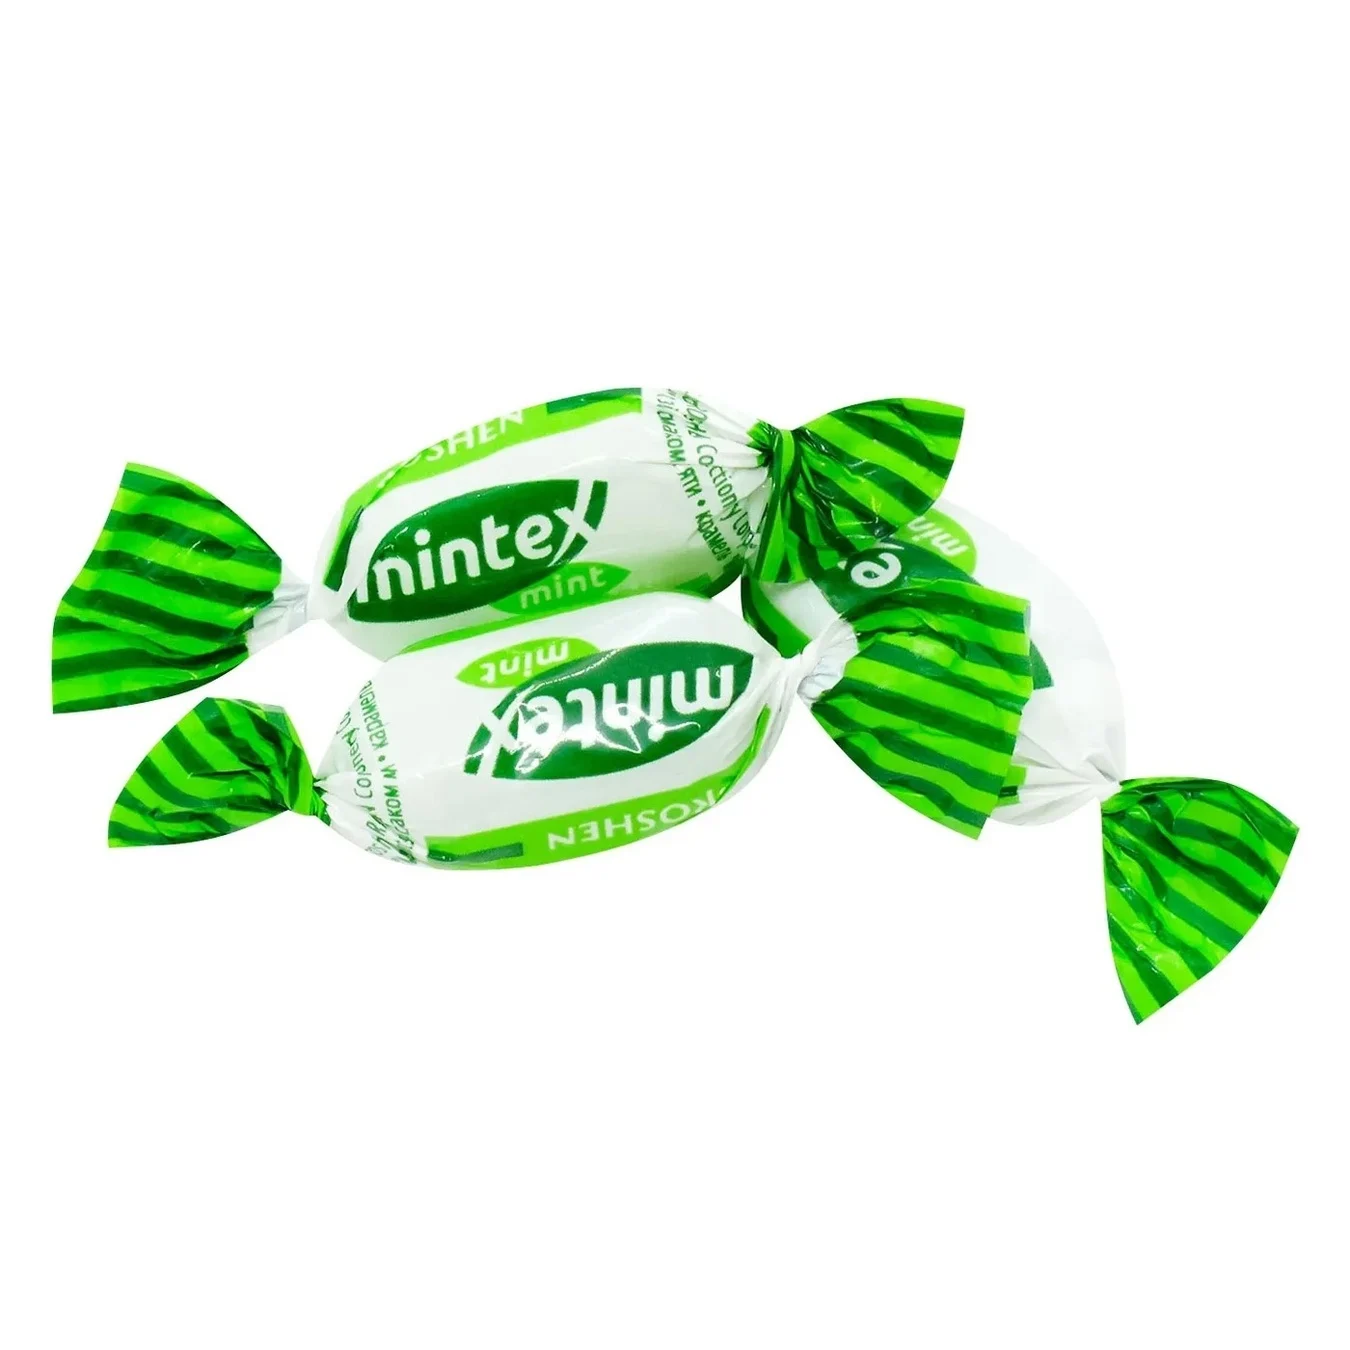 Roshen Mintex Mint caramel candies with mint flavor